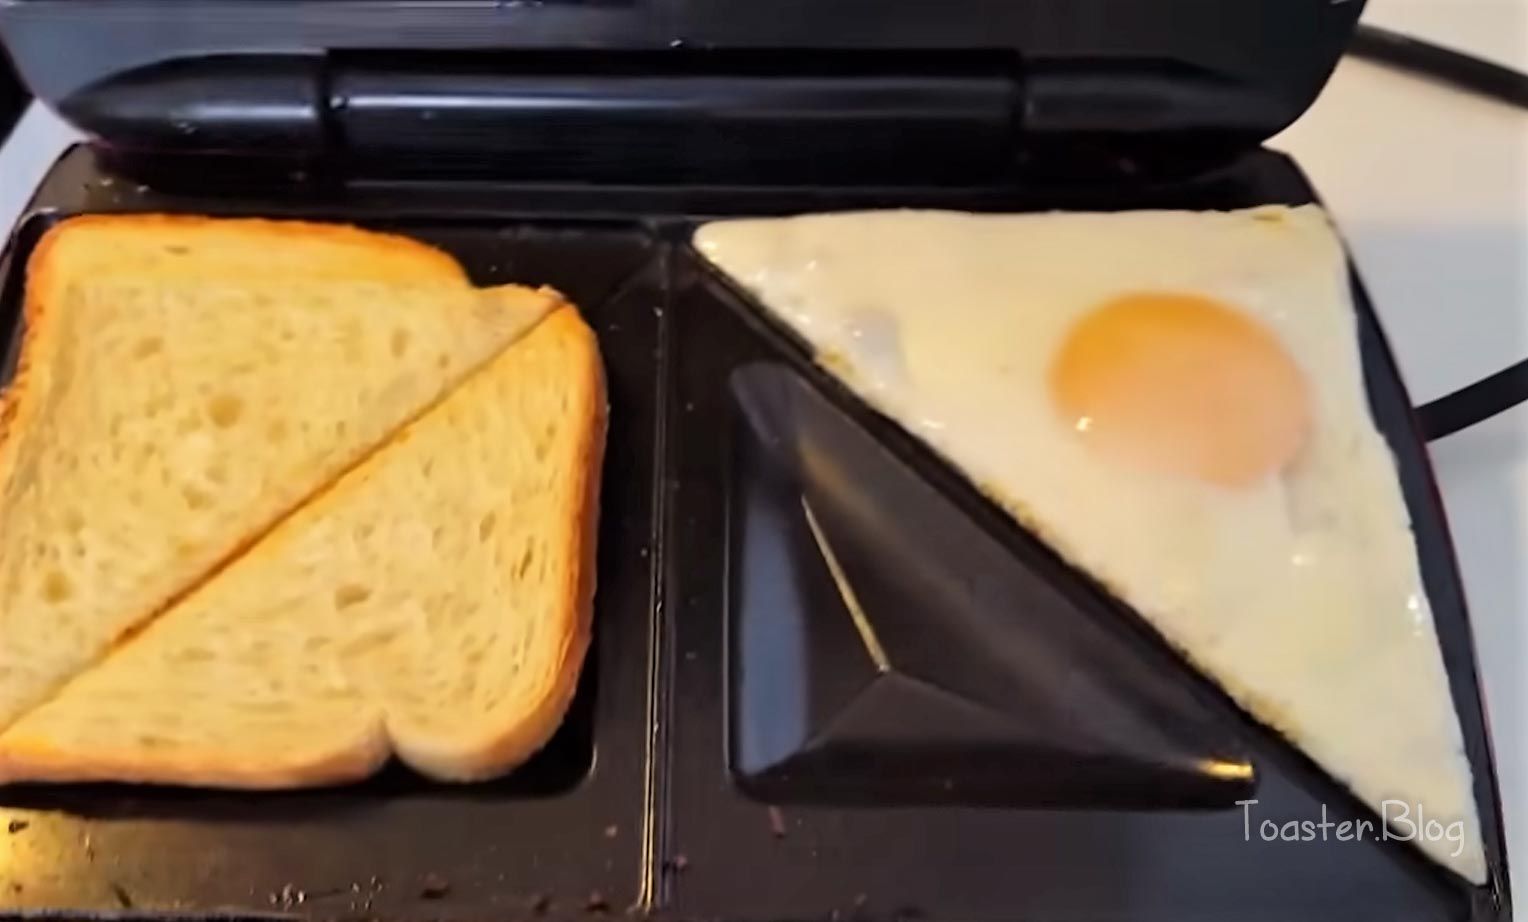 Best Egg Toaster in 2022 - Toaster Blog